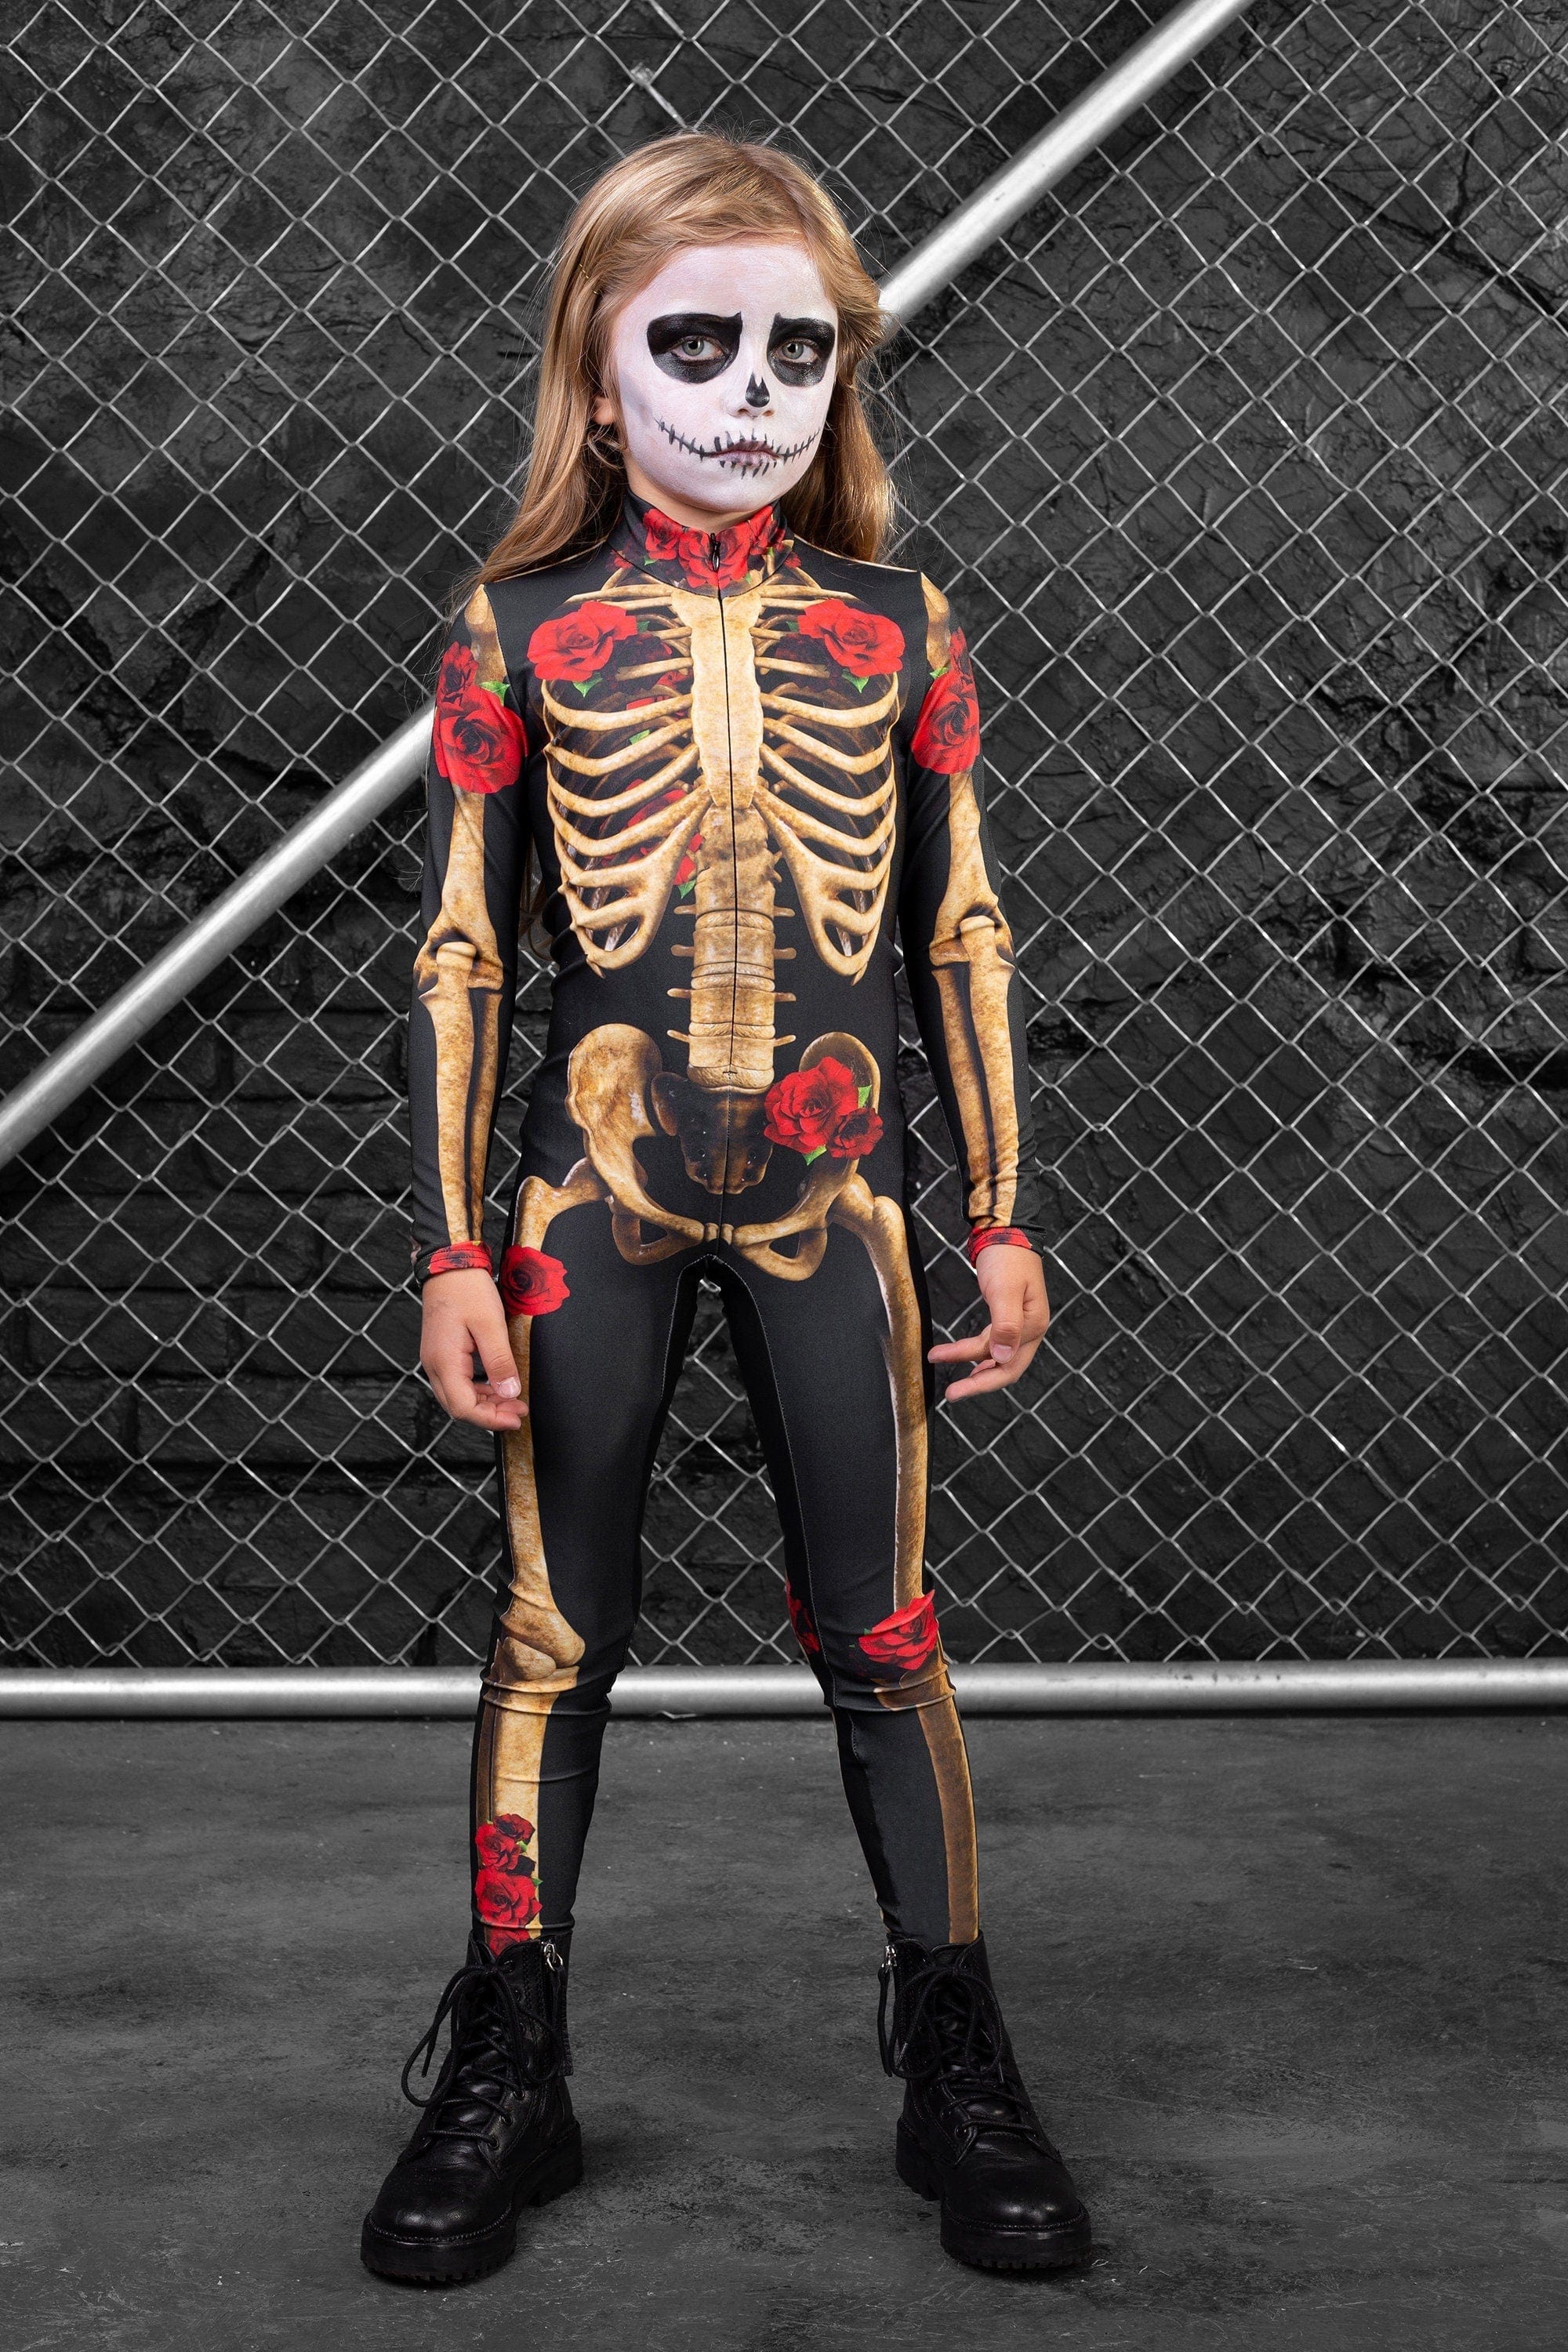 Girls La Muerta Skeleton Costume